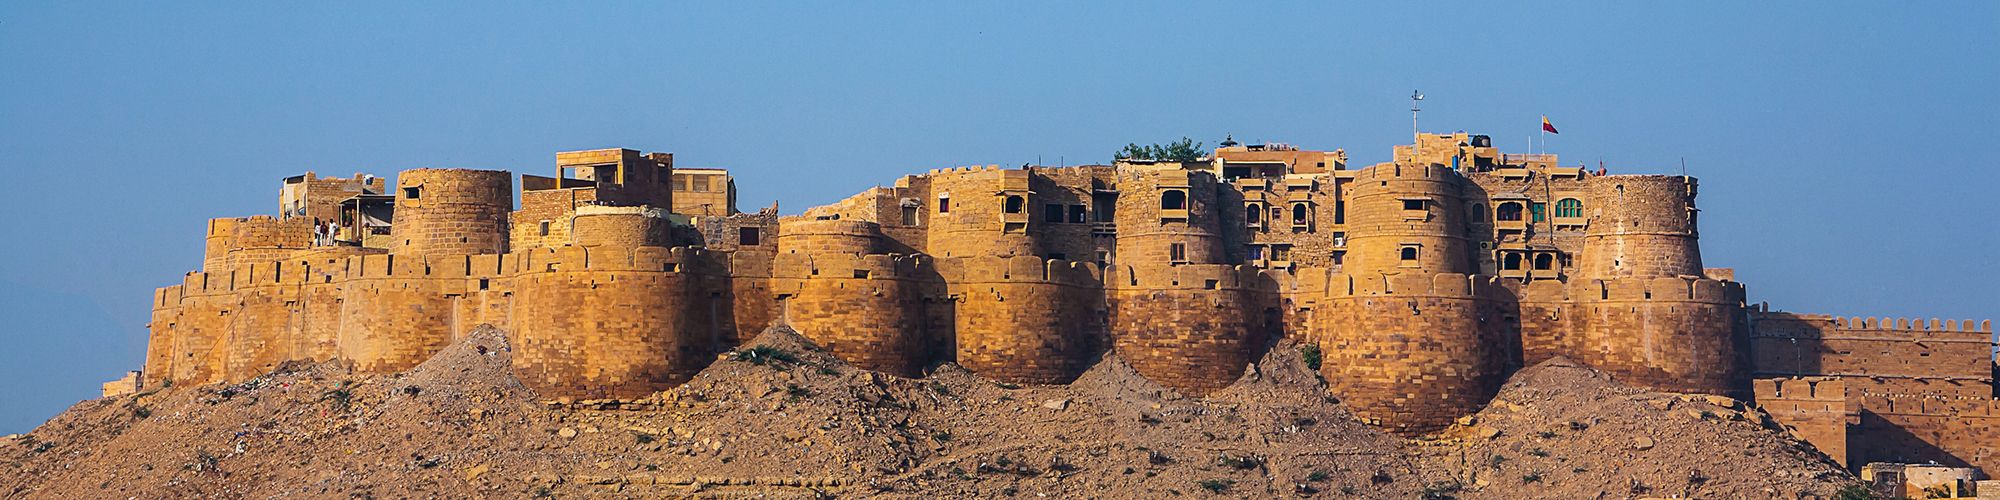 Fort, Jaisalmer, Rajasthan